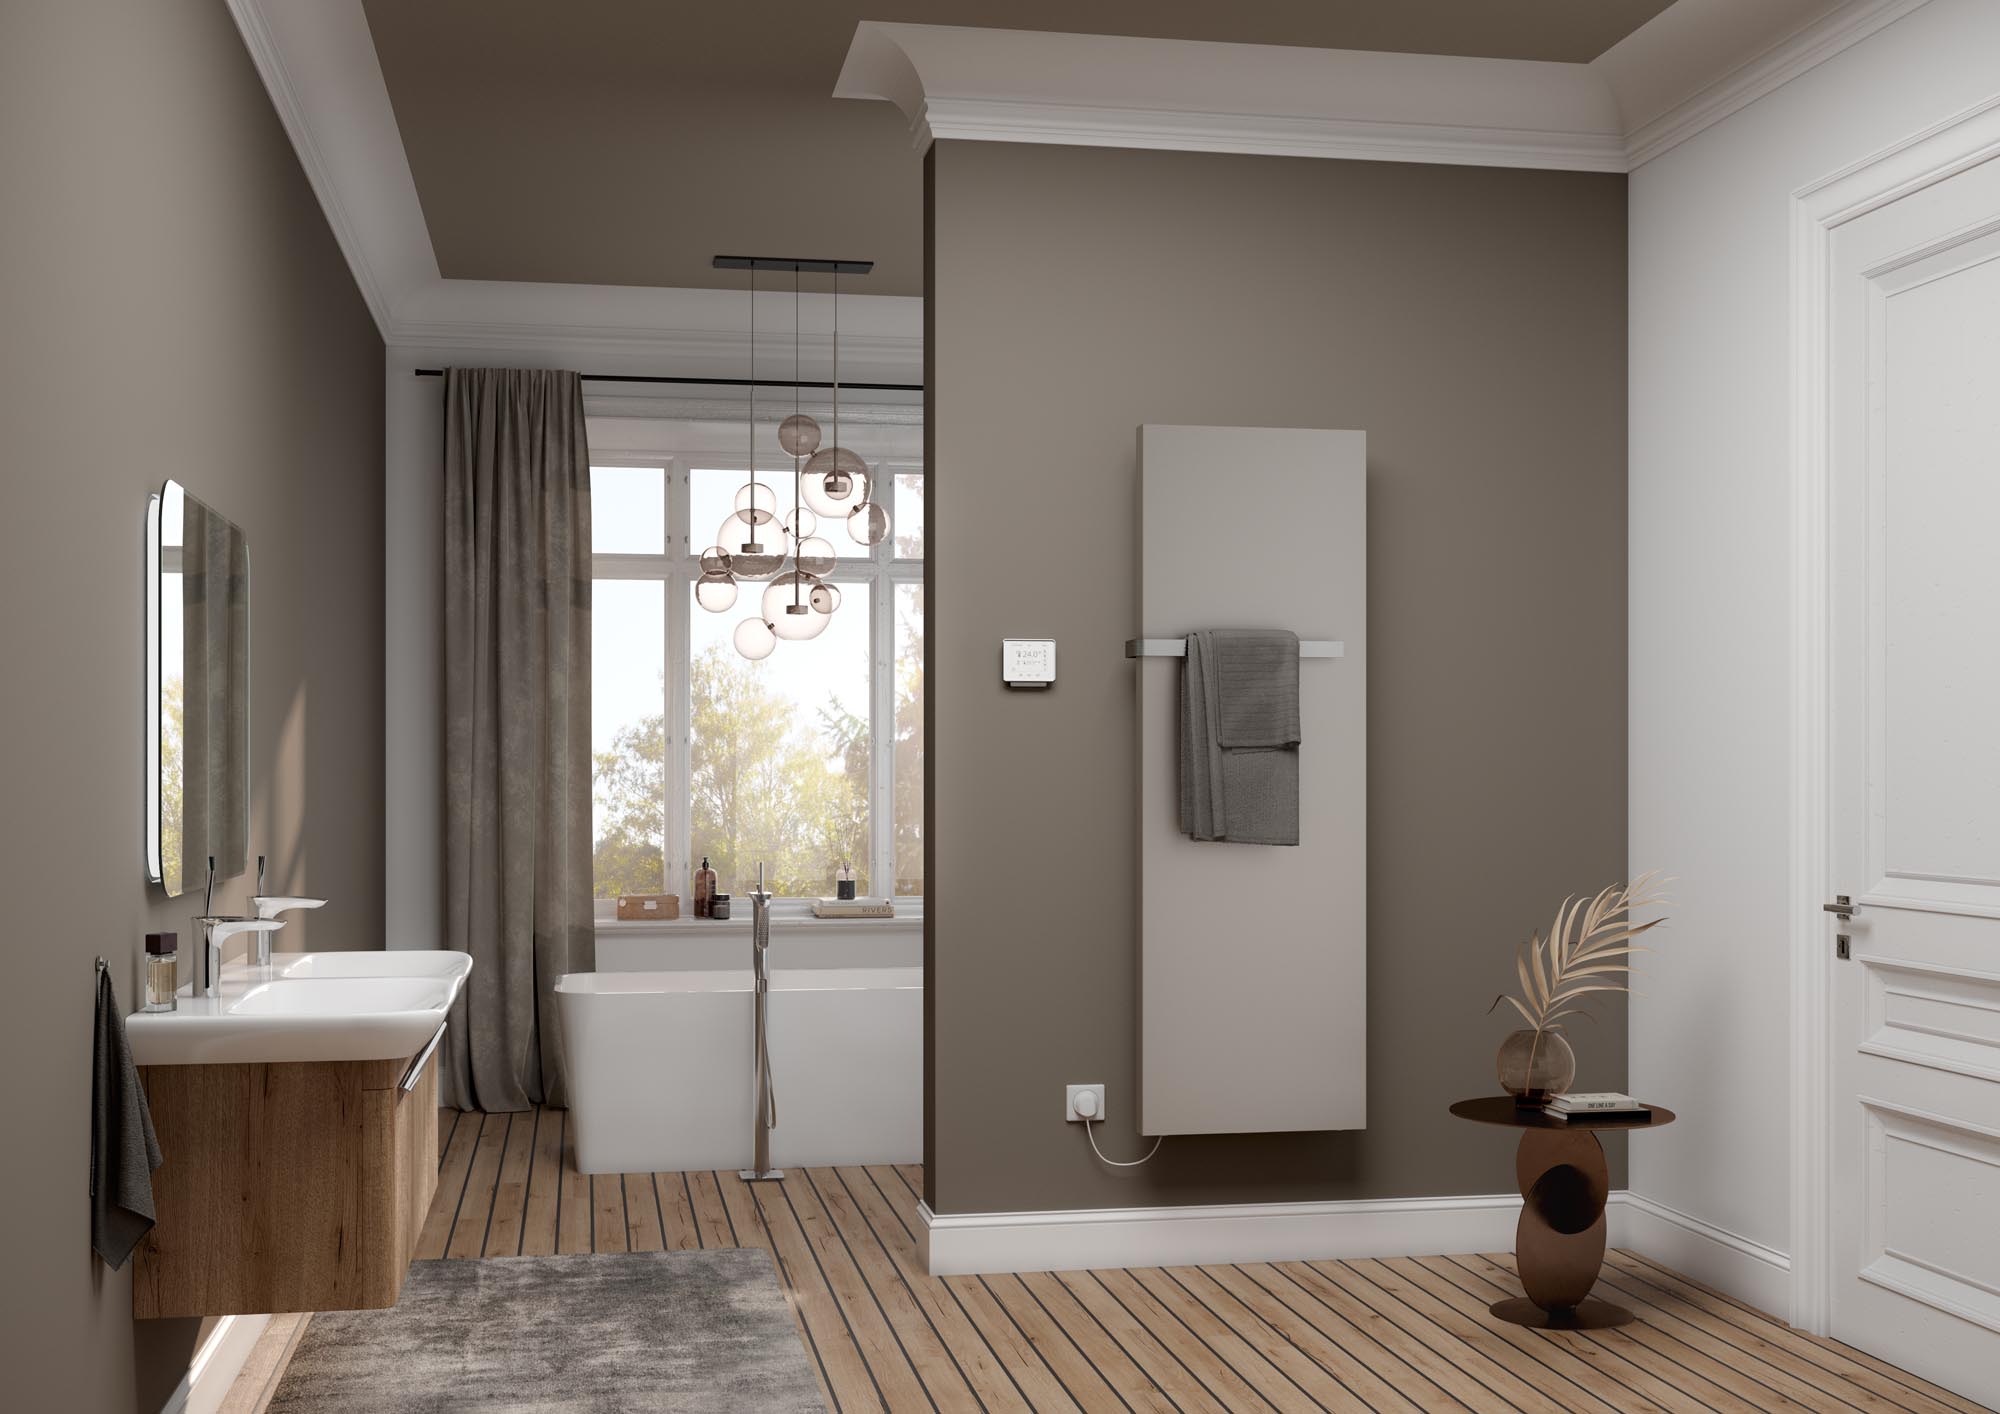 Kermi Rubeo design and bathroom radiators, also available as electric radiators.